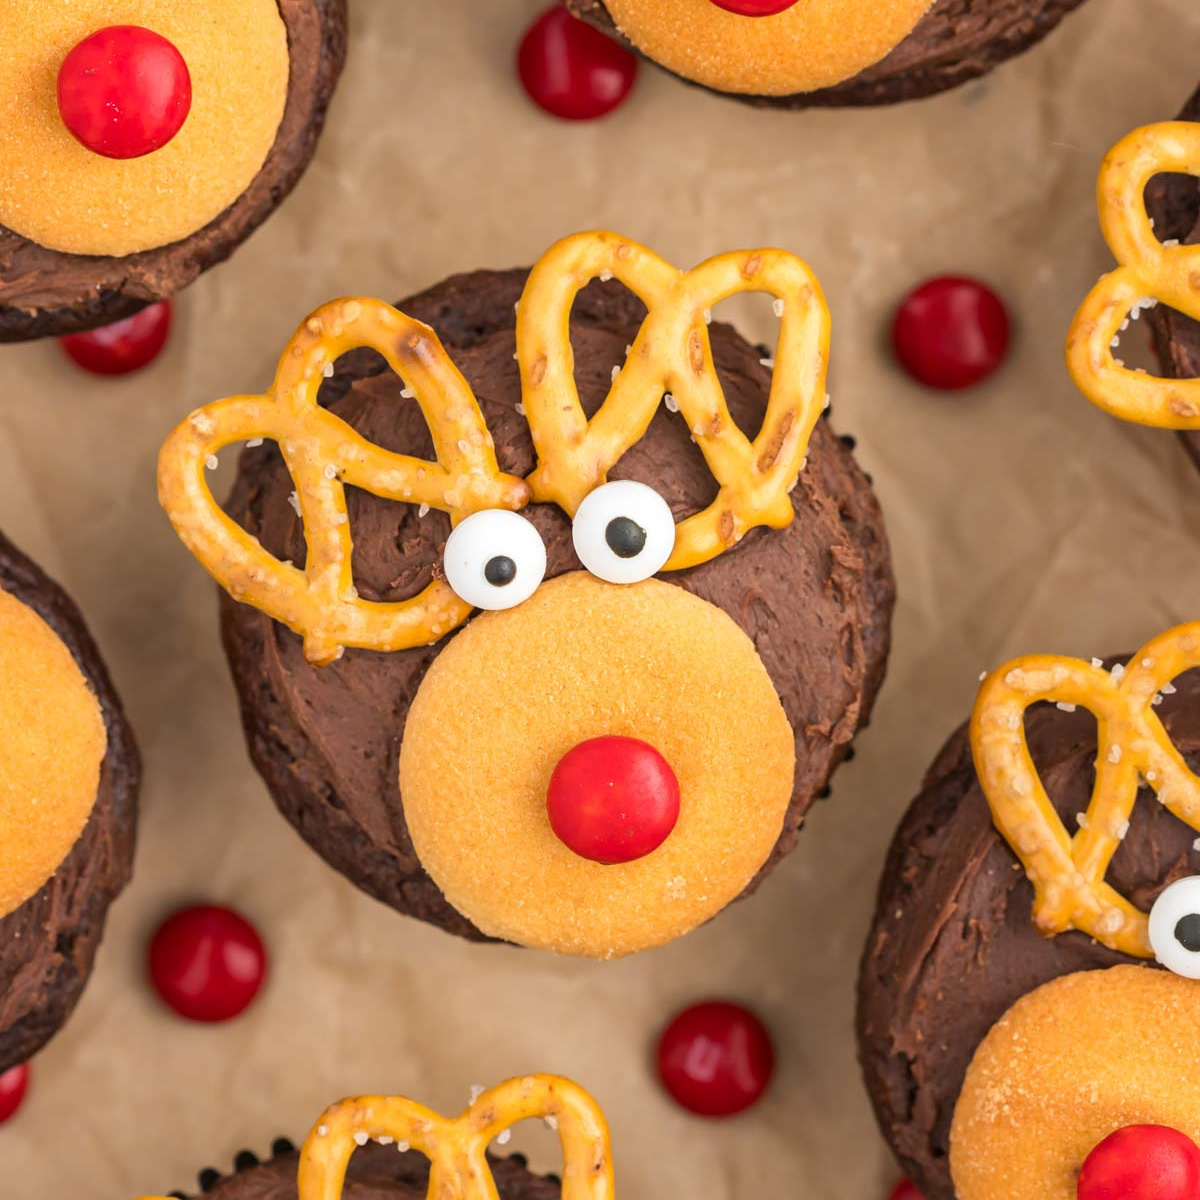 https://www.eatingonadime.com/wp-content/uploads/2020/12/1200-x-1800-Reindeer-Cupcakes-Eating-on-a-Dime-Square.jpg